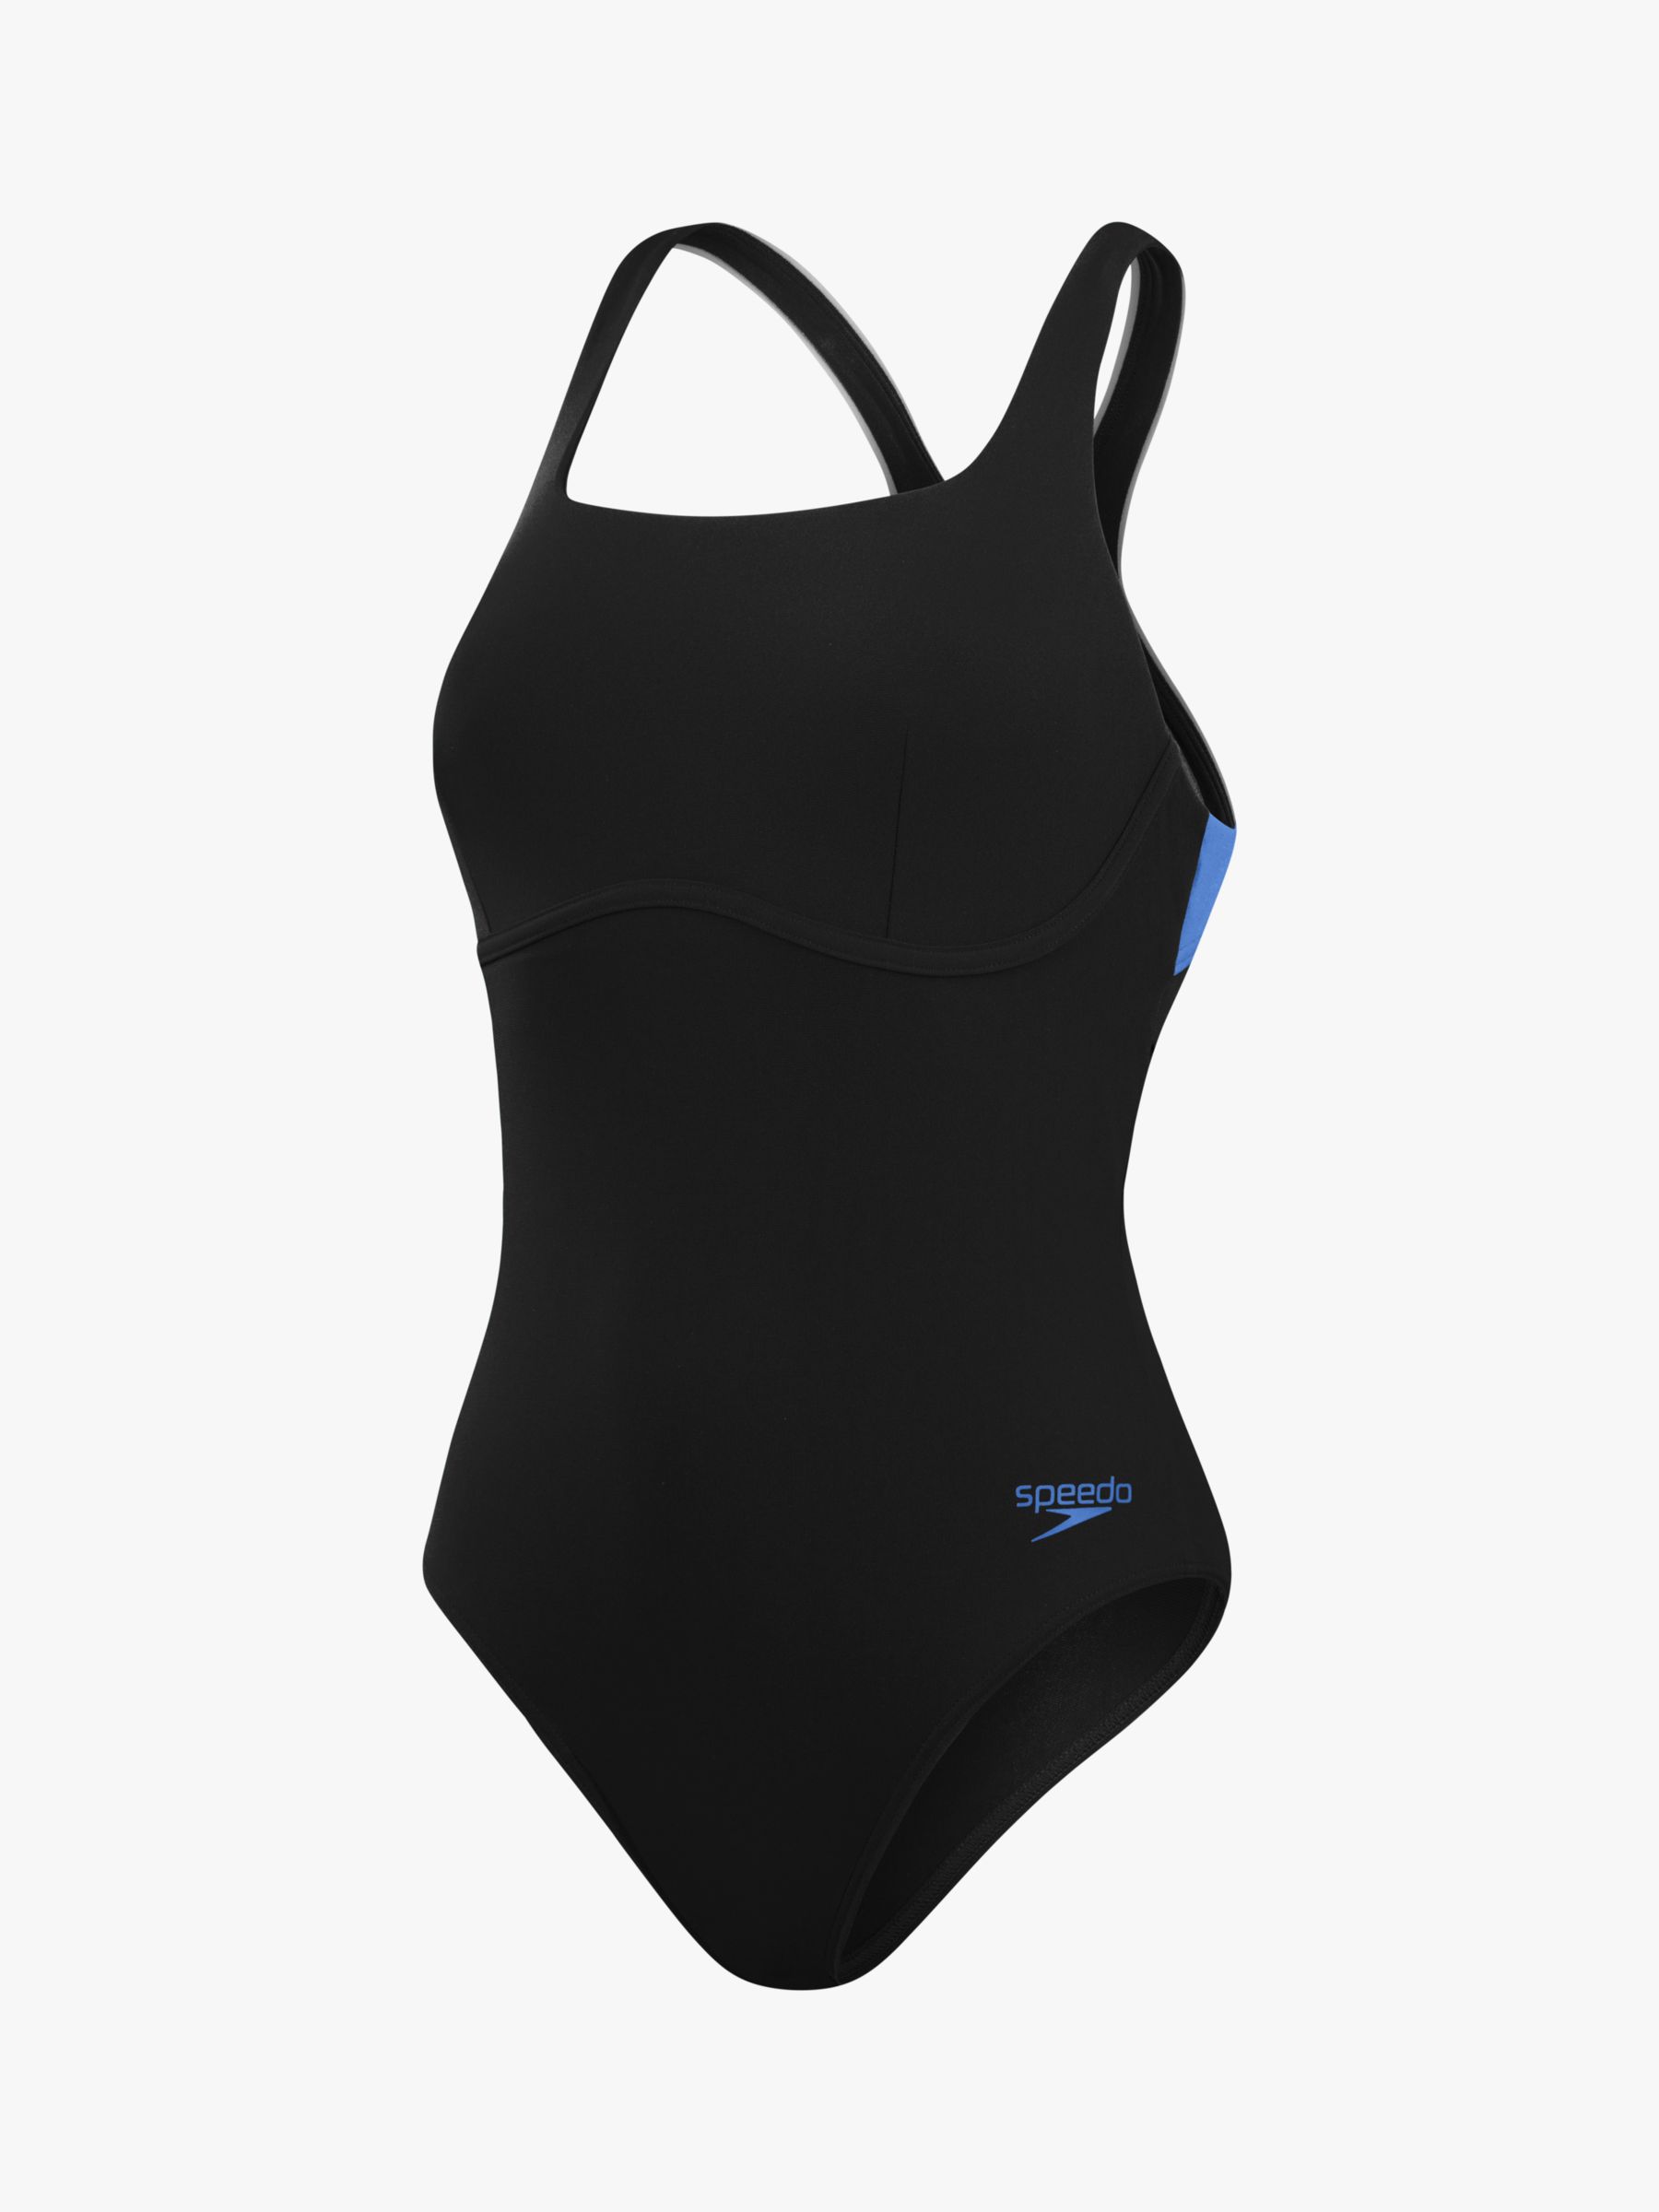 Speedo Flex Band Swimsuit, Black/Curious Blue, 36